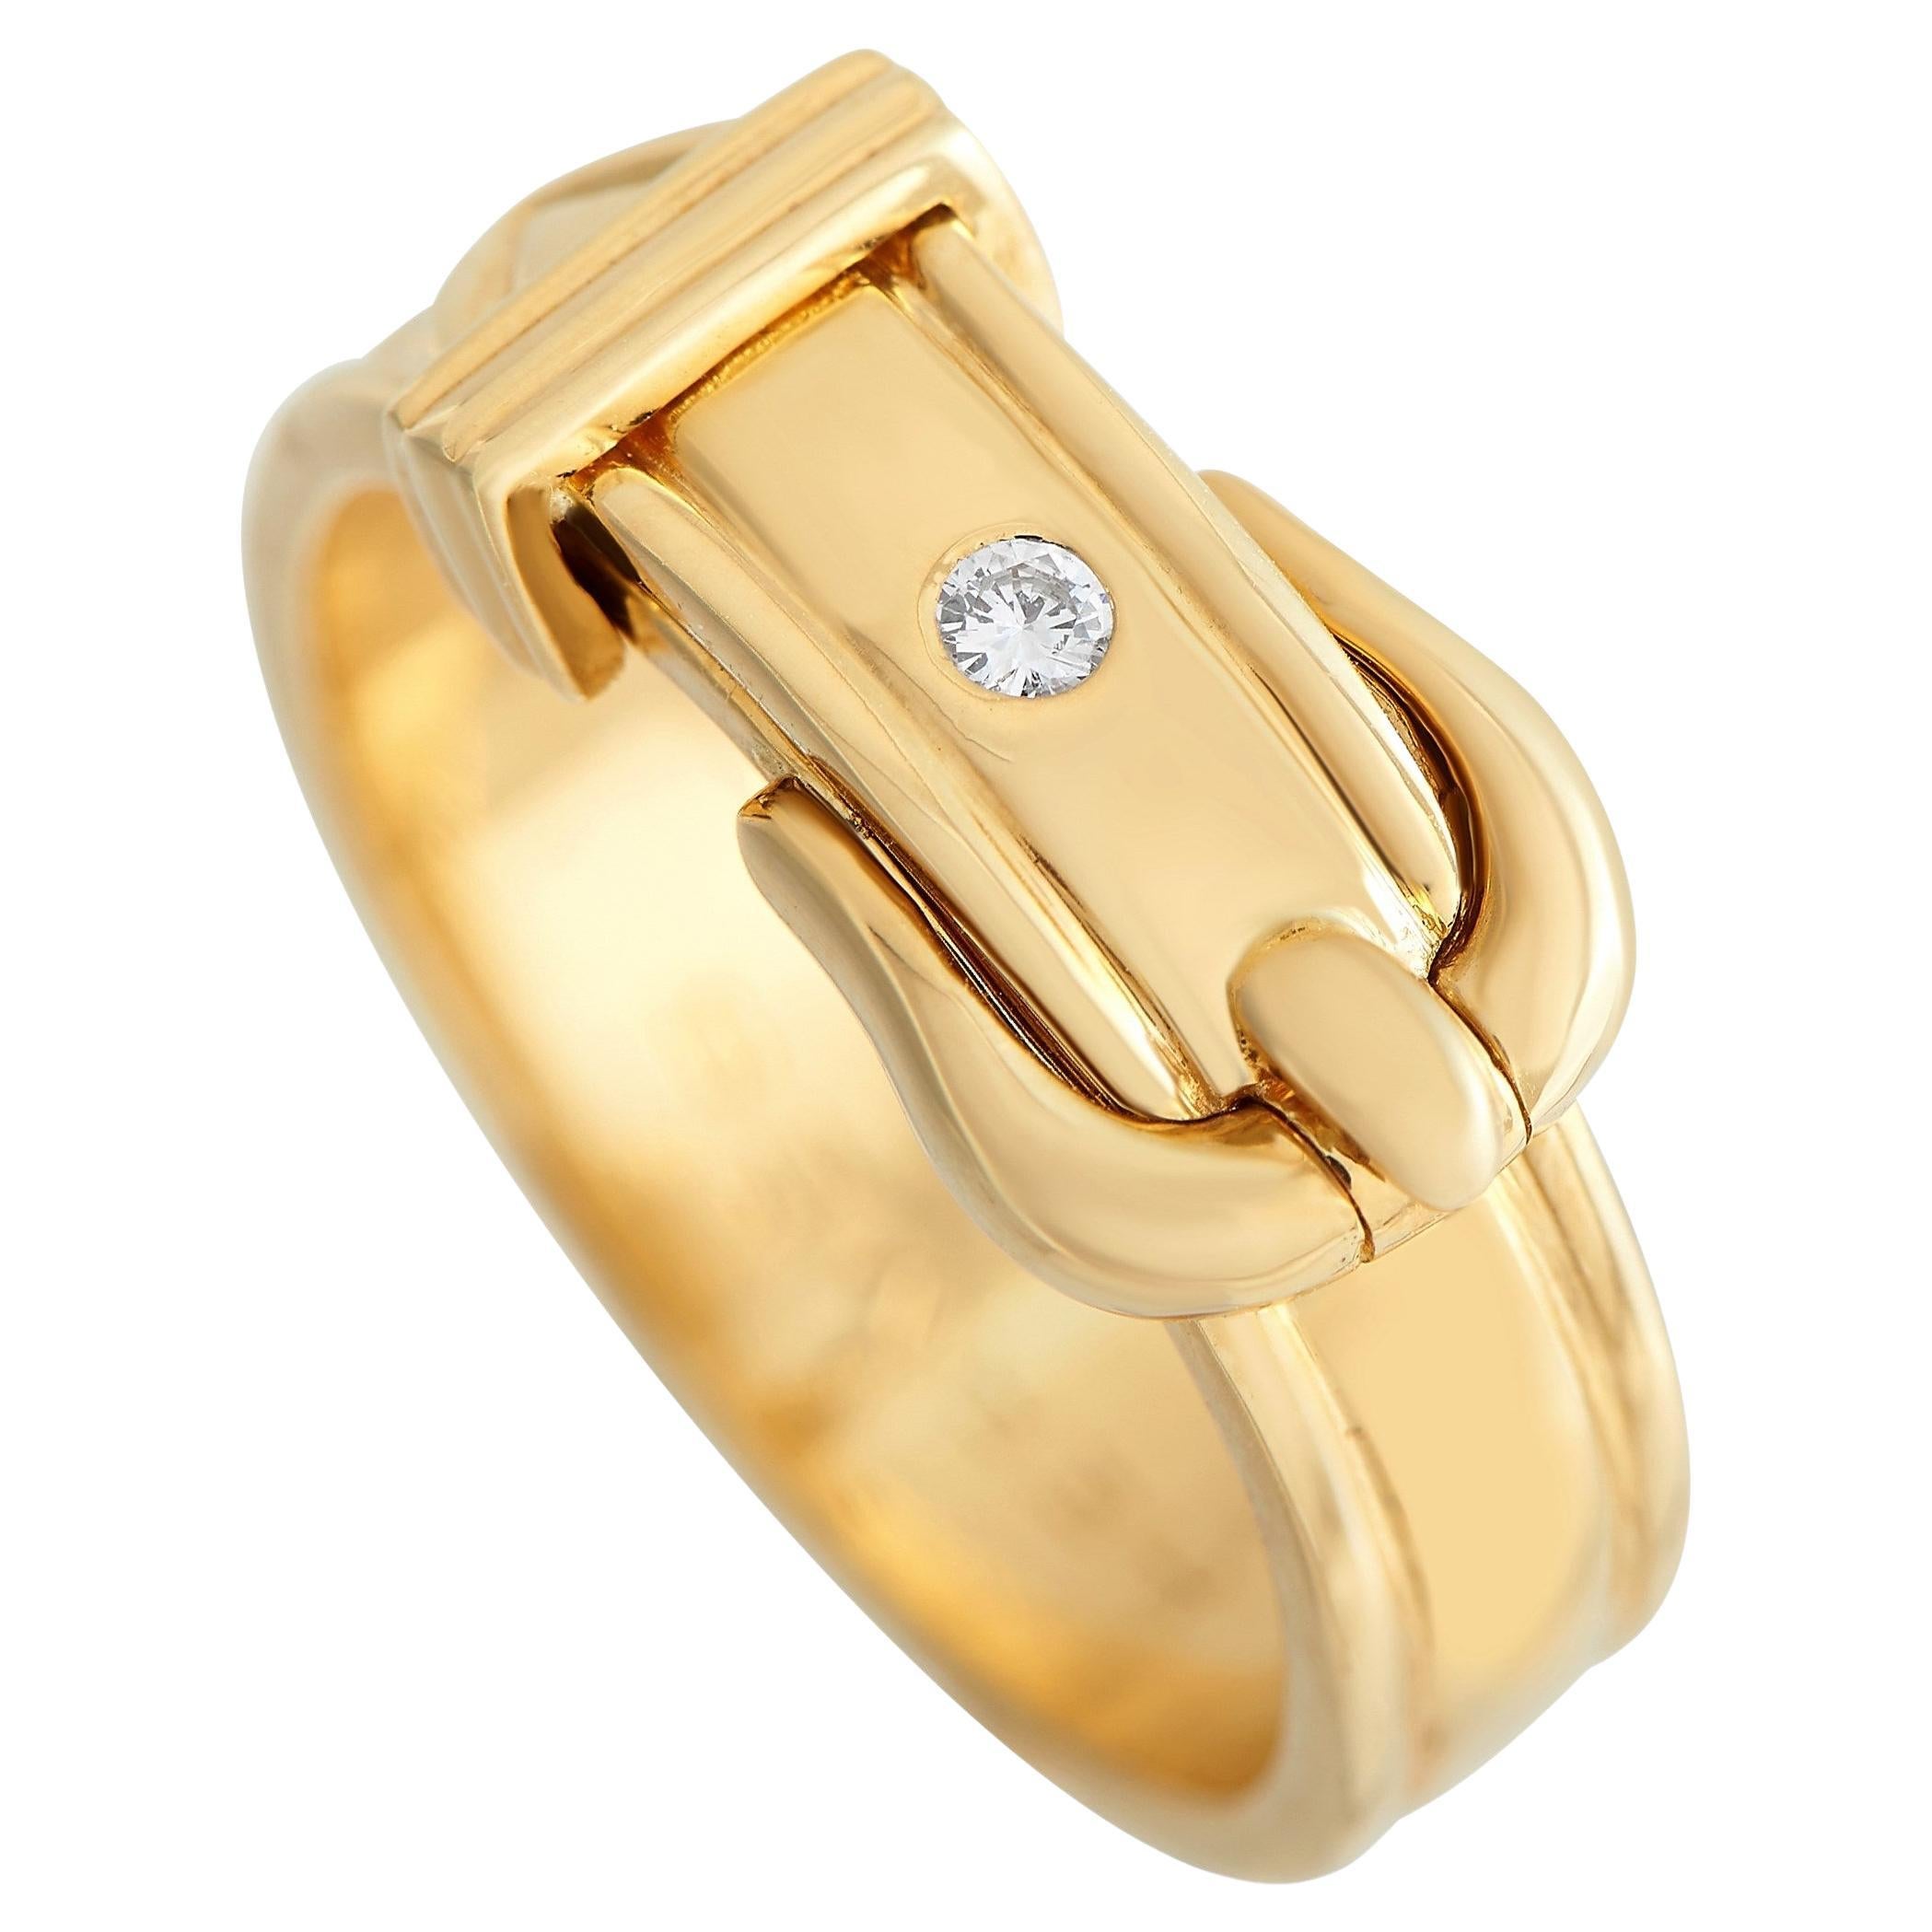 Hermès 18K Yellow Gold Belt Buckle Ring